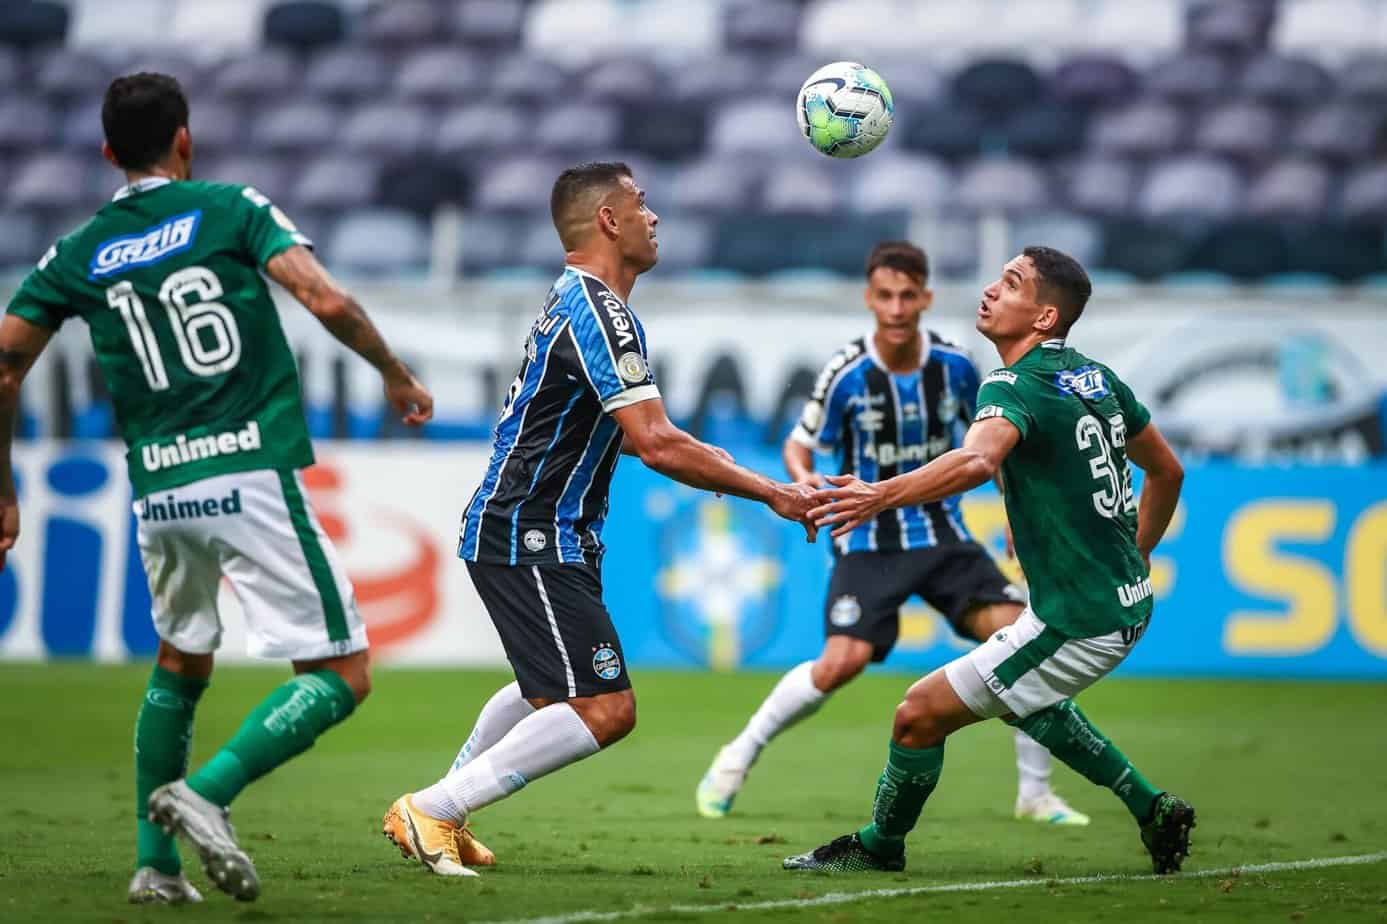 Goiás vs. Grêmio Odds and Prediction